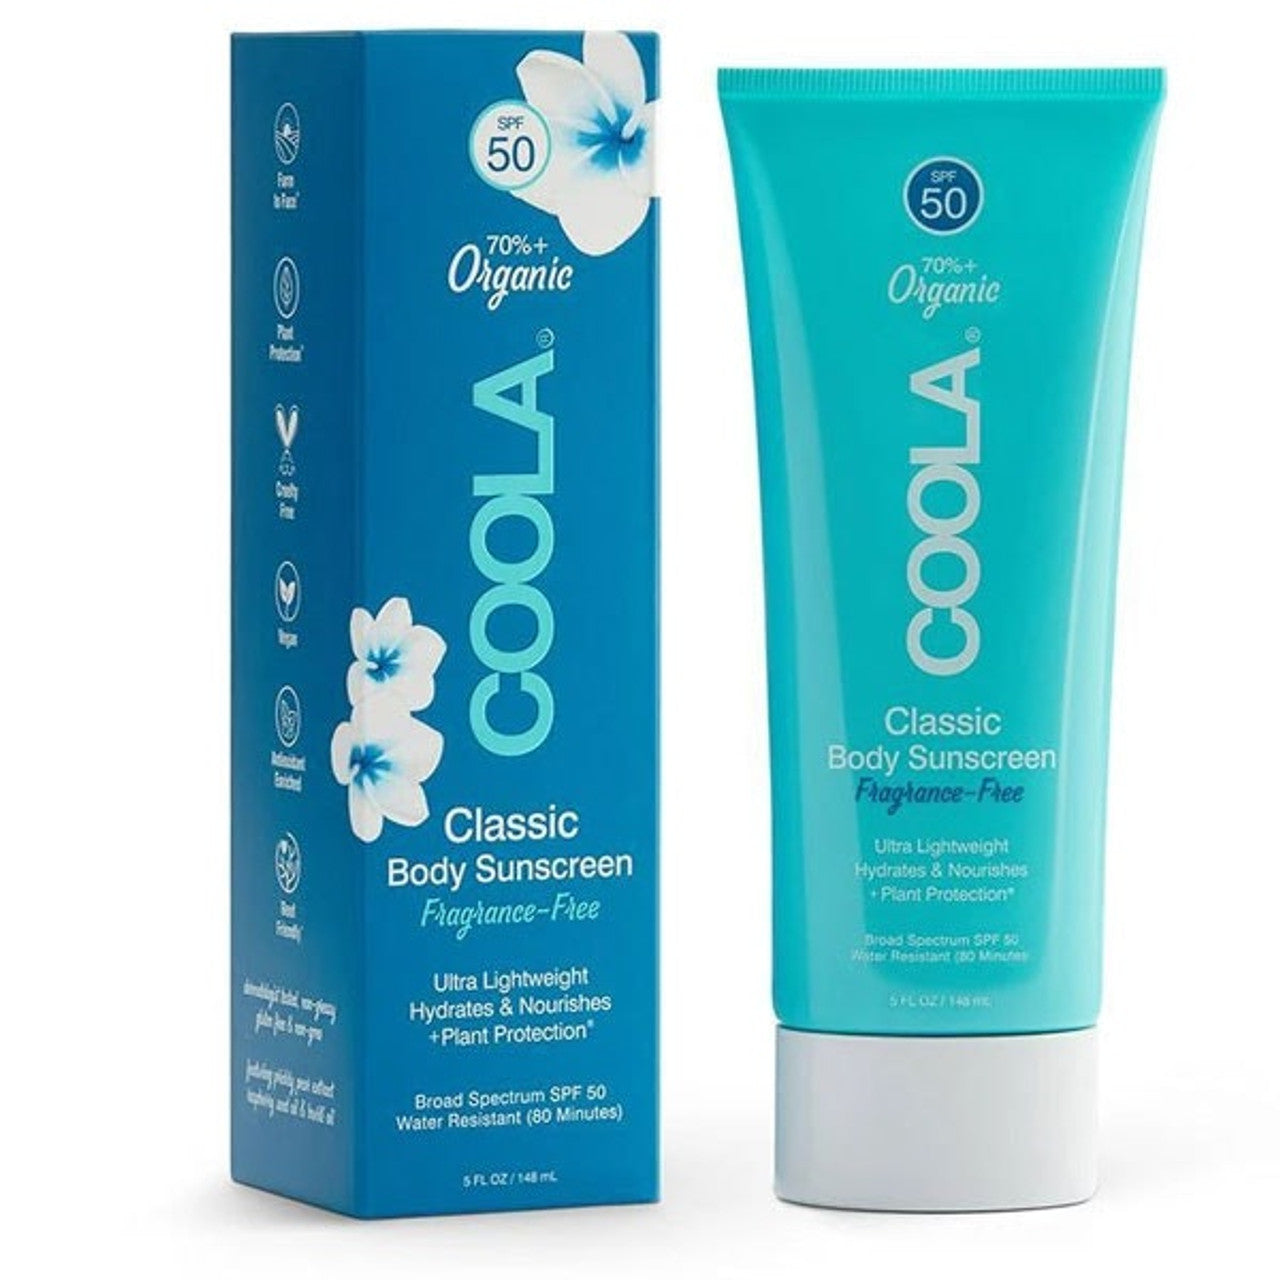 Coola Classic Body Sunscreen SPF50 Fragrance-Free 70%+ Organic